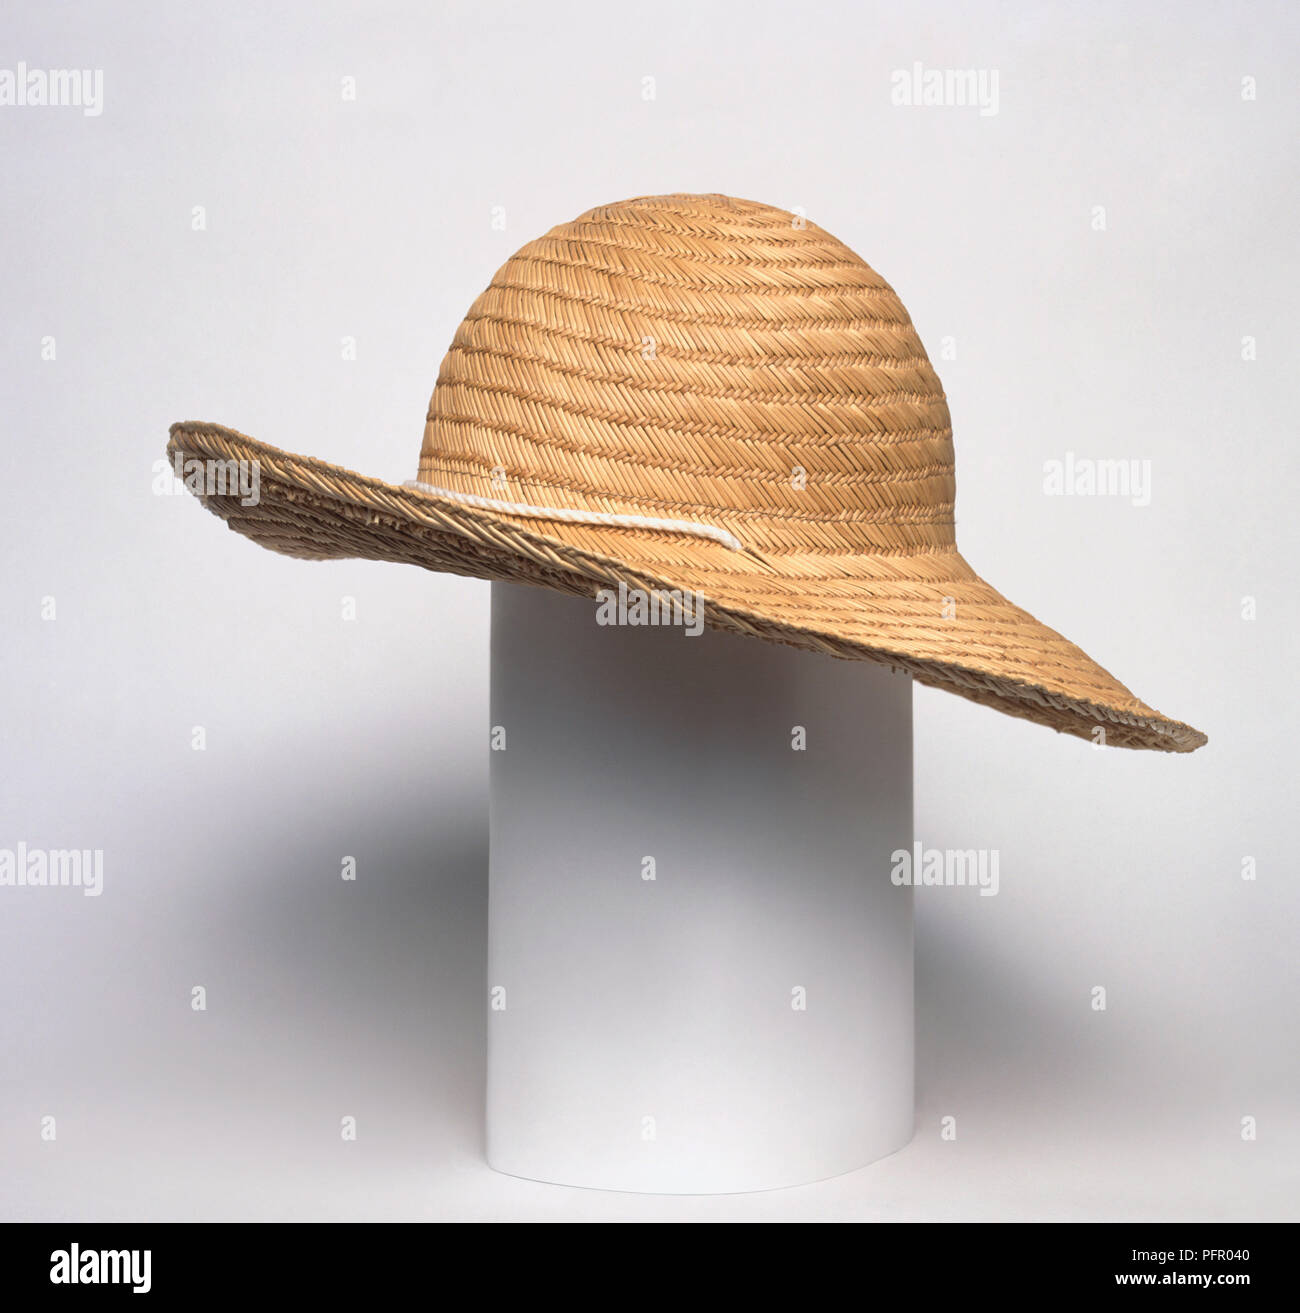 Medieval style straw hat Stock Photo - Alamy